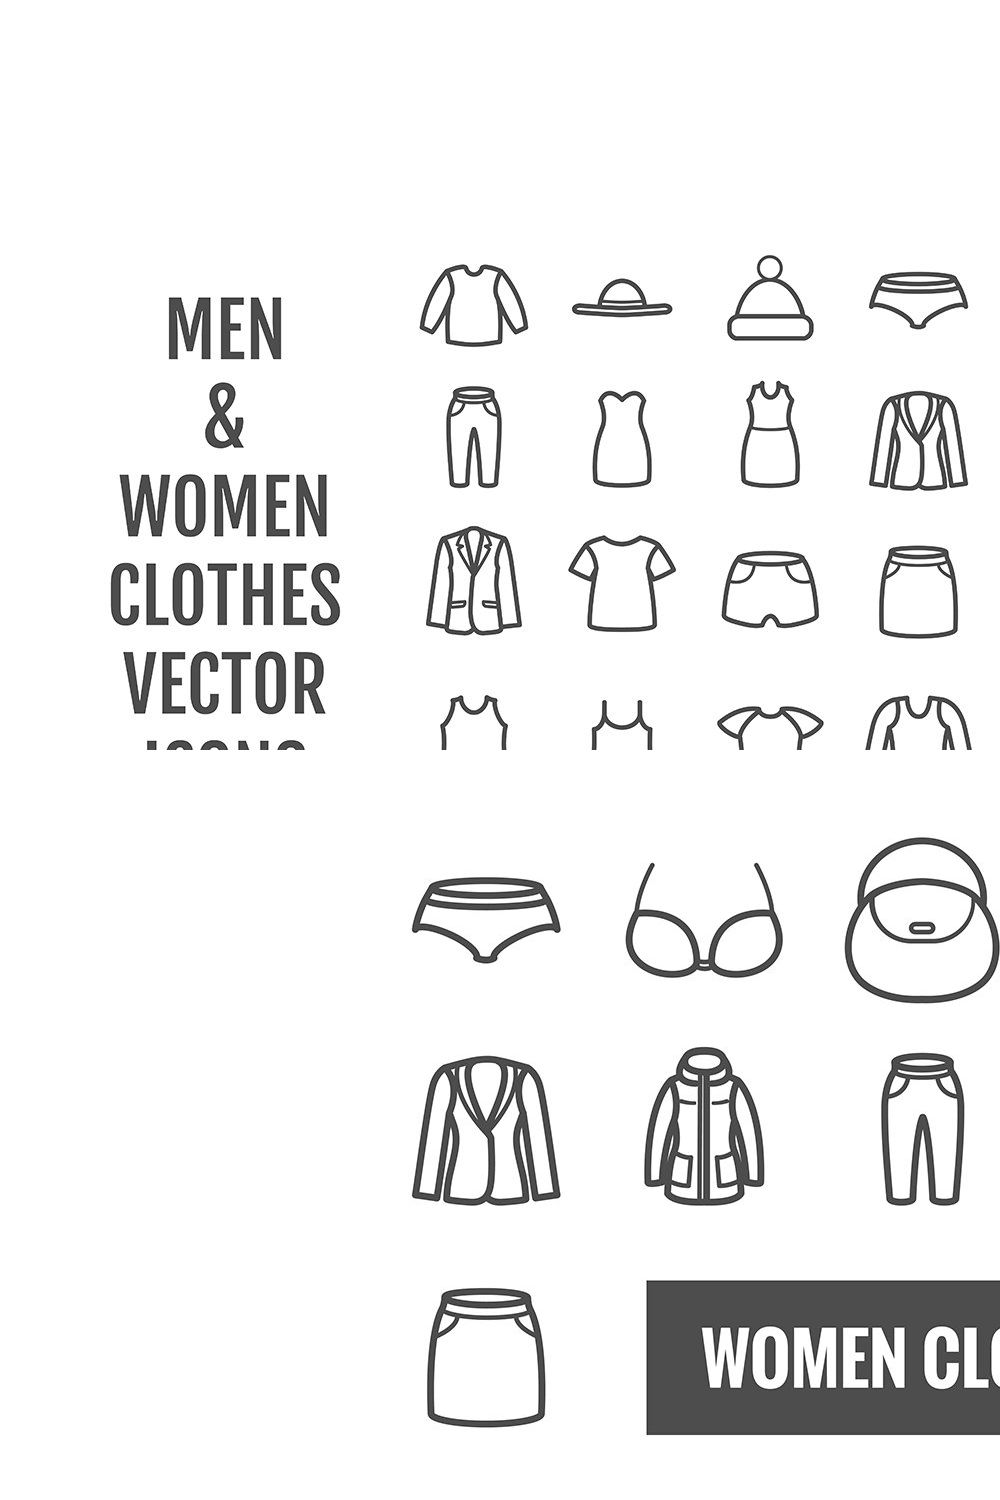 44 vector men & women clothes icons pinterest preview image.